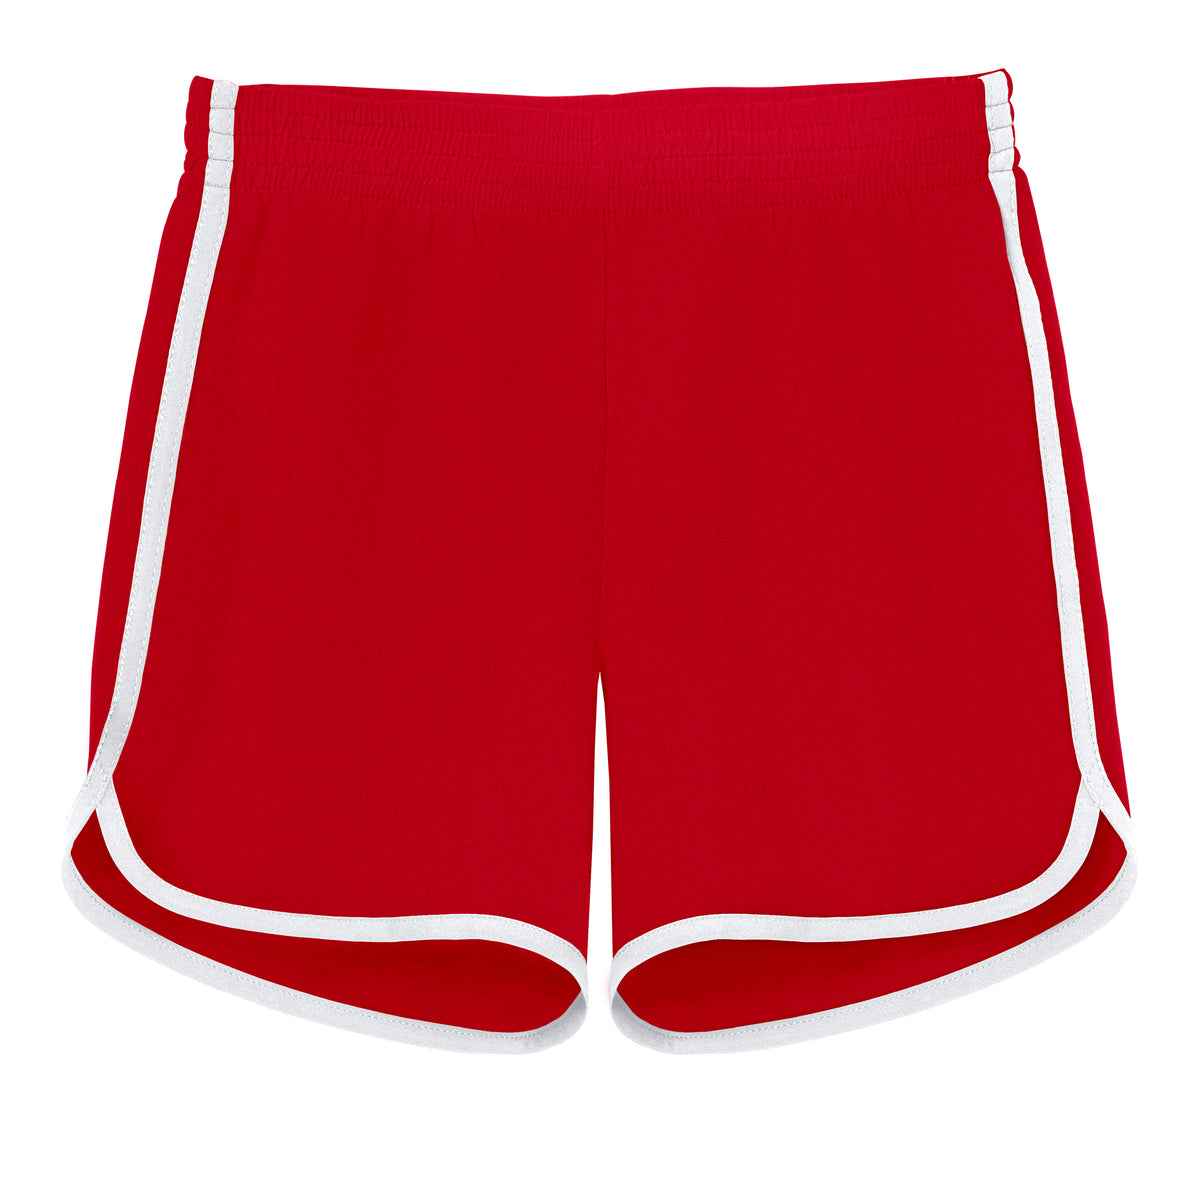 Boys UPF 50+ Classic Surf Style Boys Swim Shorts - Mid-Thigh Length | Red w/ White